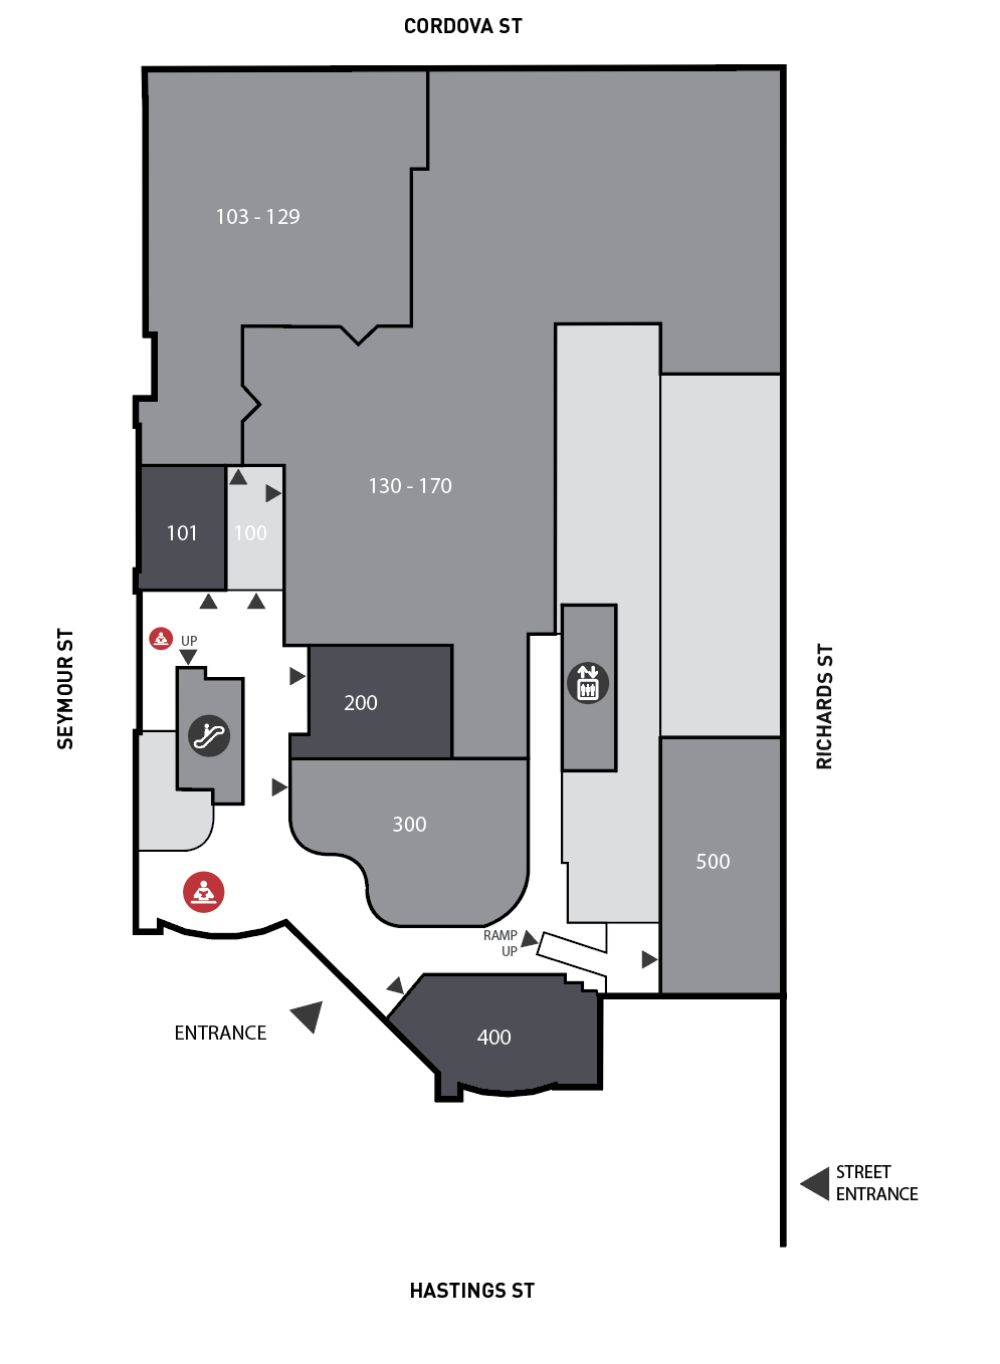 UM level floor plan highlighting study spaces